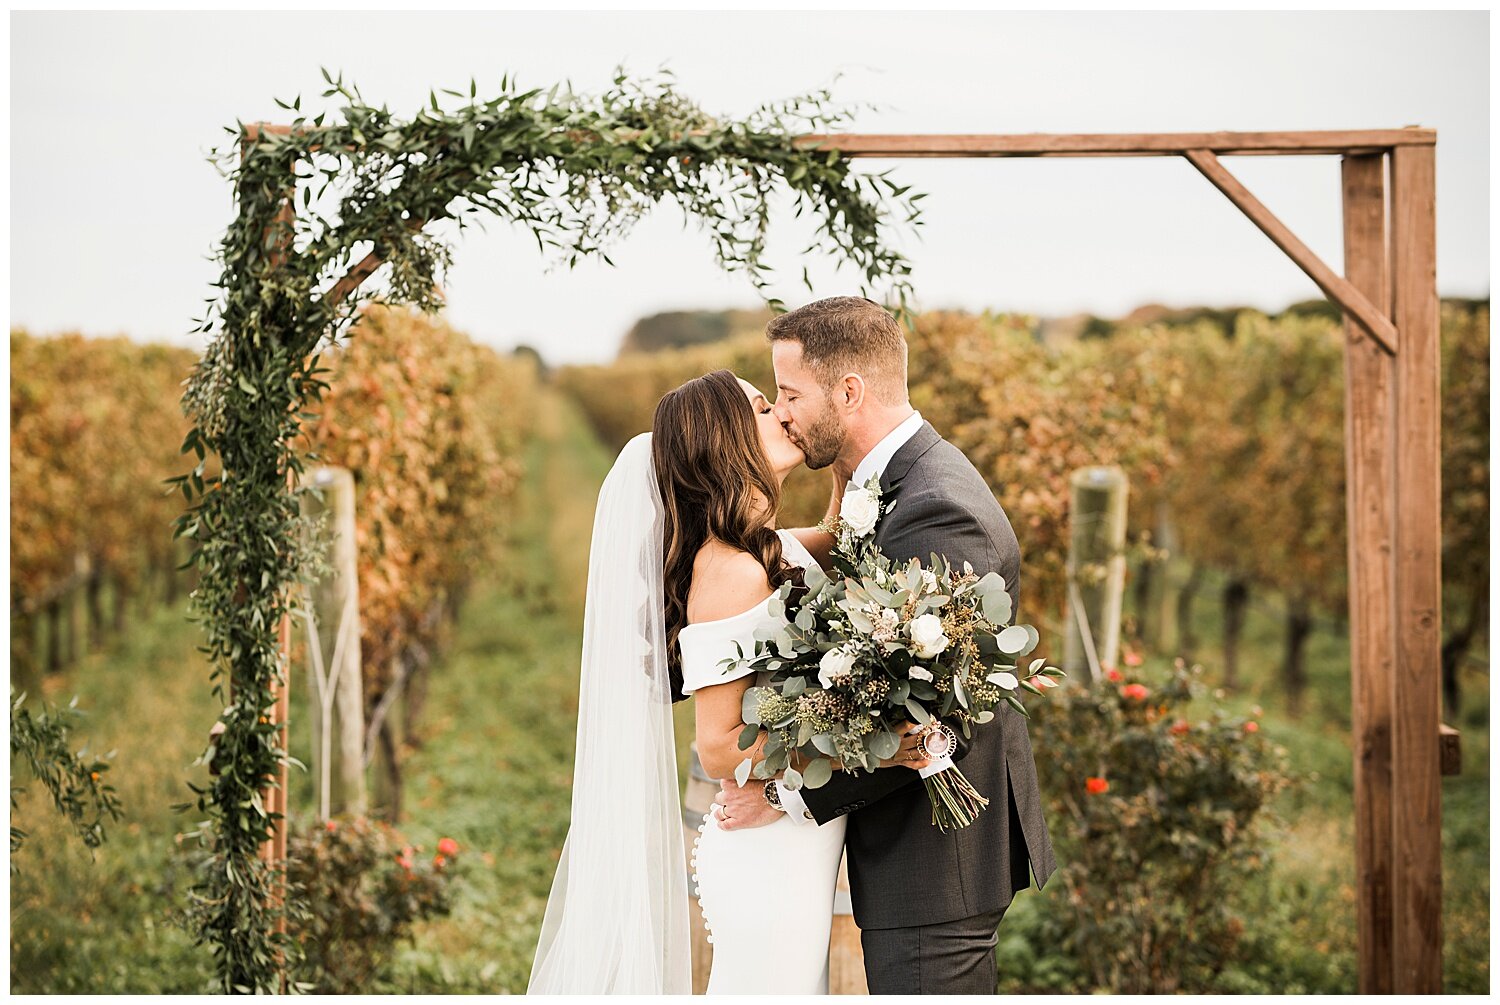 RGNY-Wedding-Photography-North-Fork-Vineyard-Apollo-Fields-048.jpg